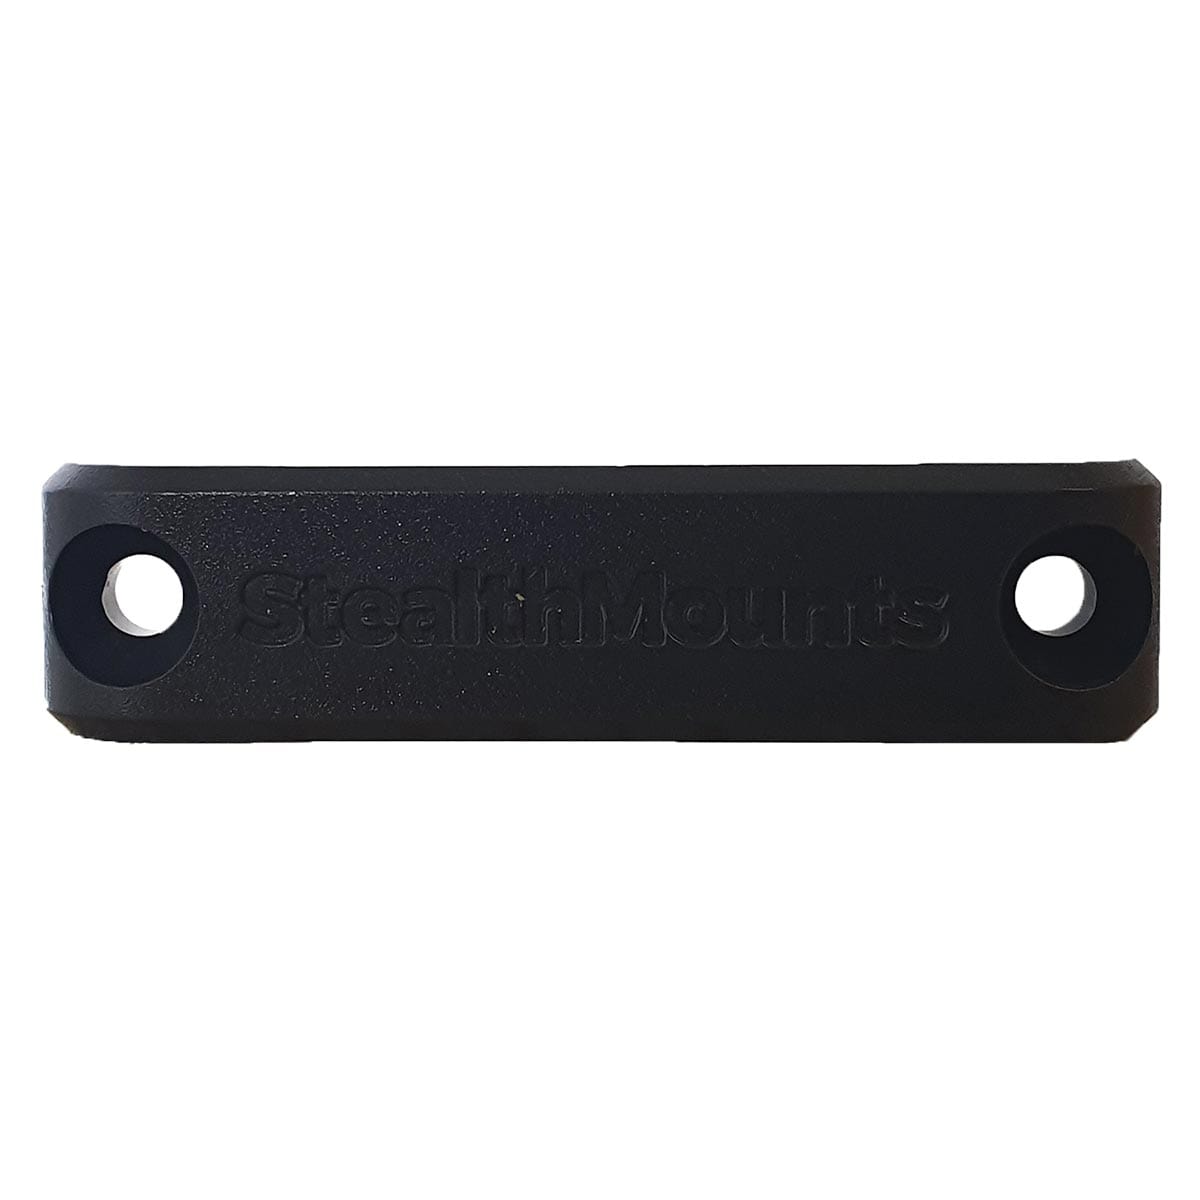 Stealthmounts Bench Belt - Universal Tool Holster- 6 Pack